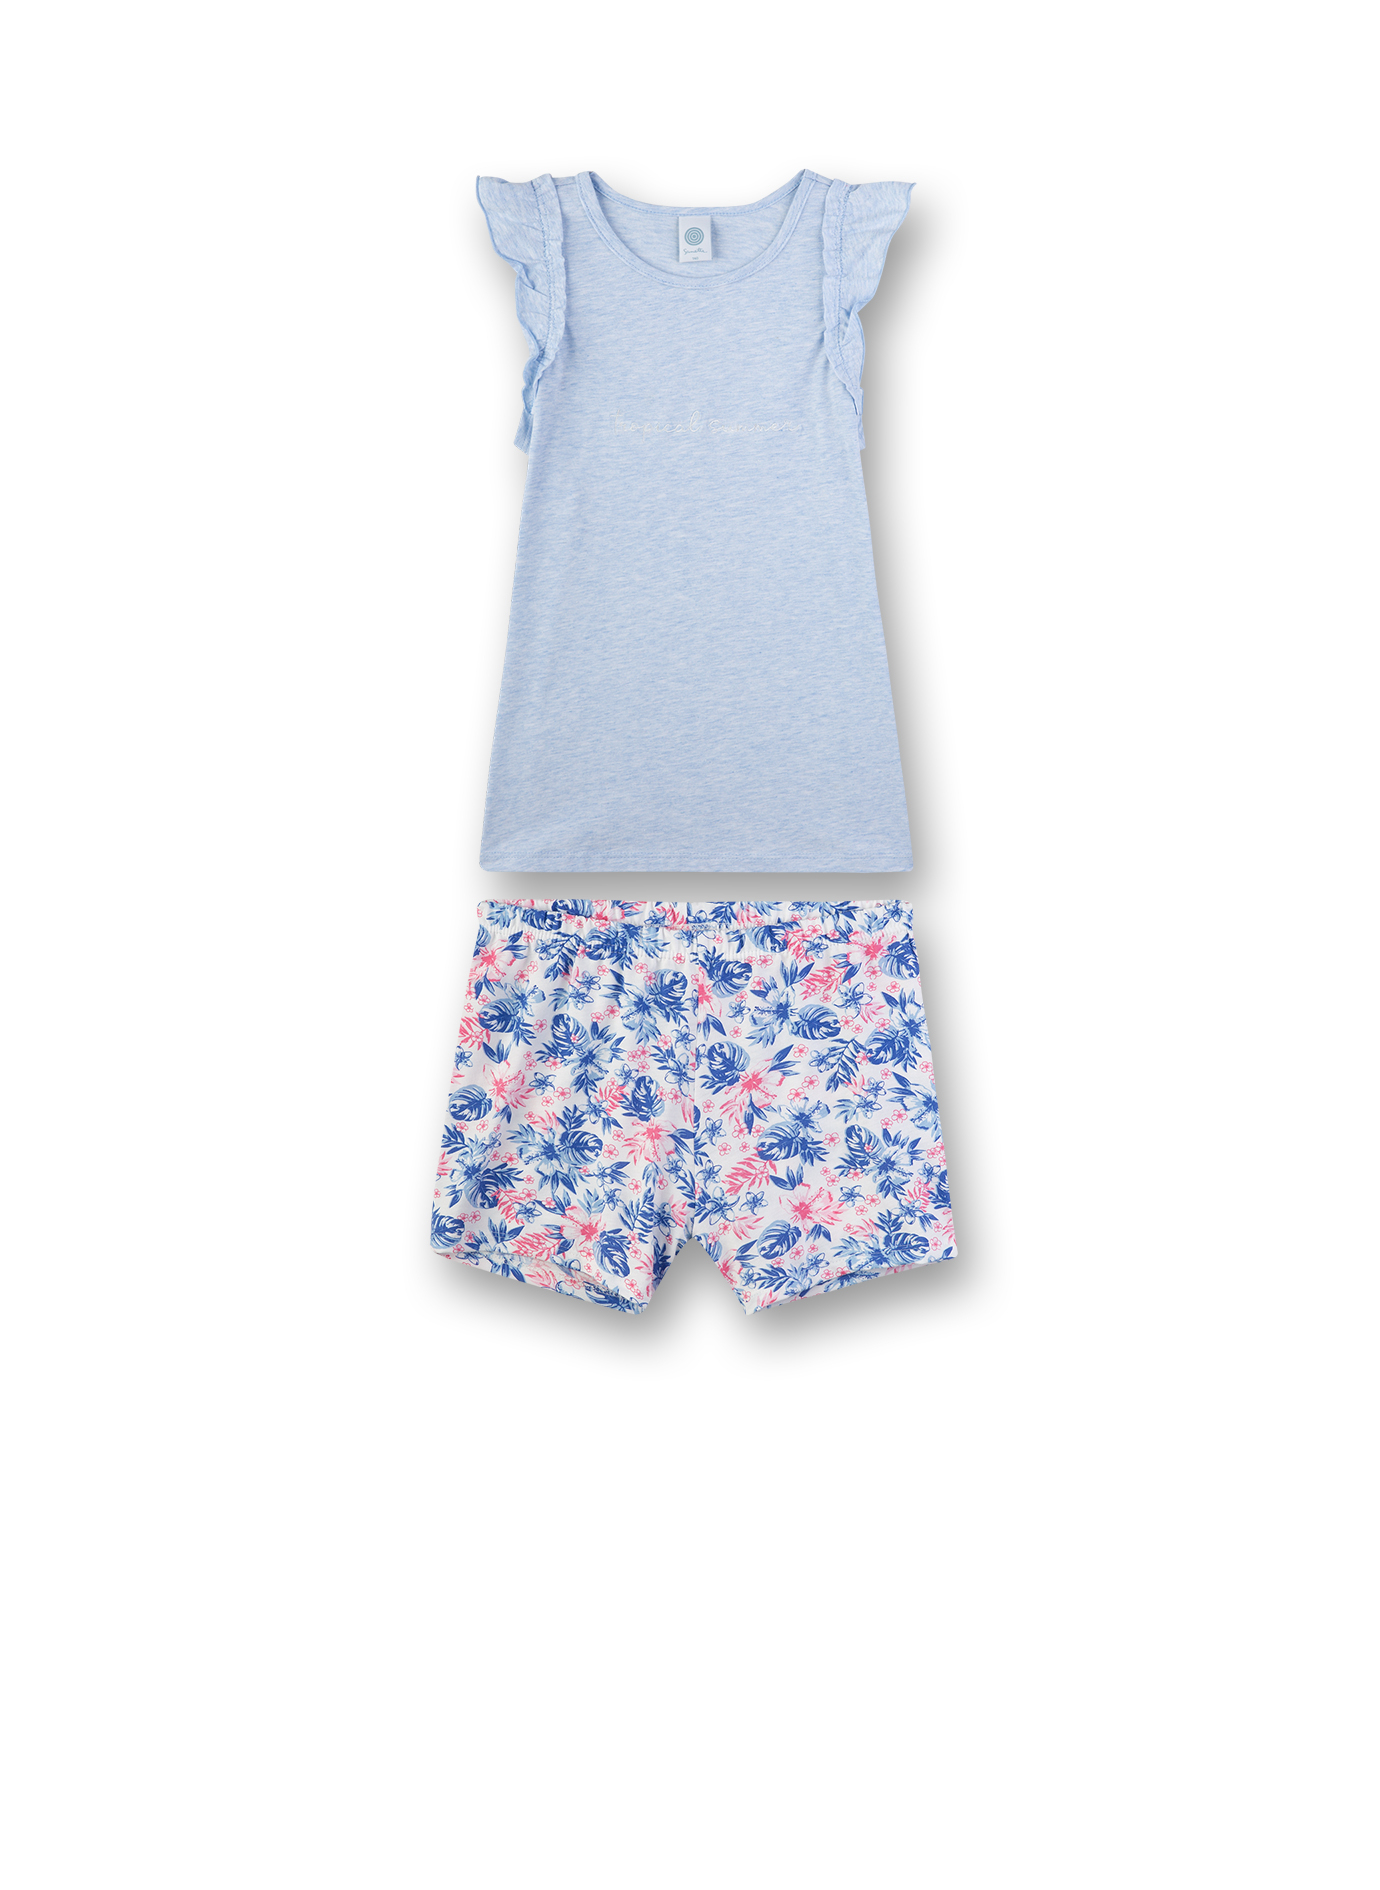 Mädchen-Schlafanzug Blau Tropic Blossom  